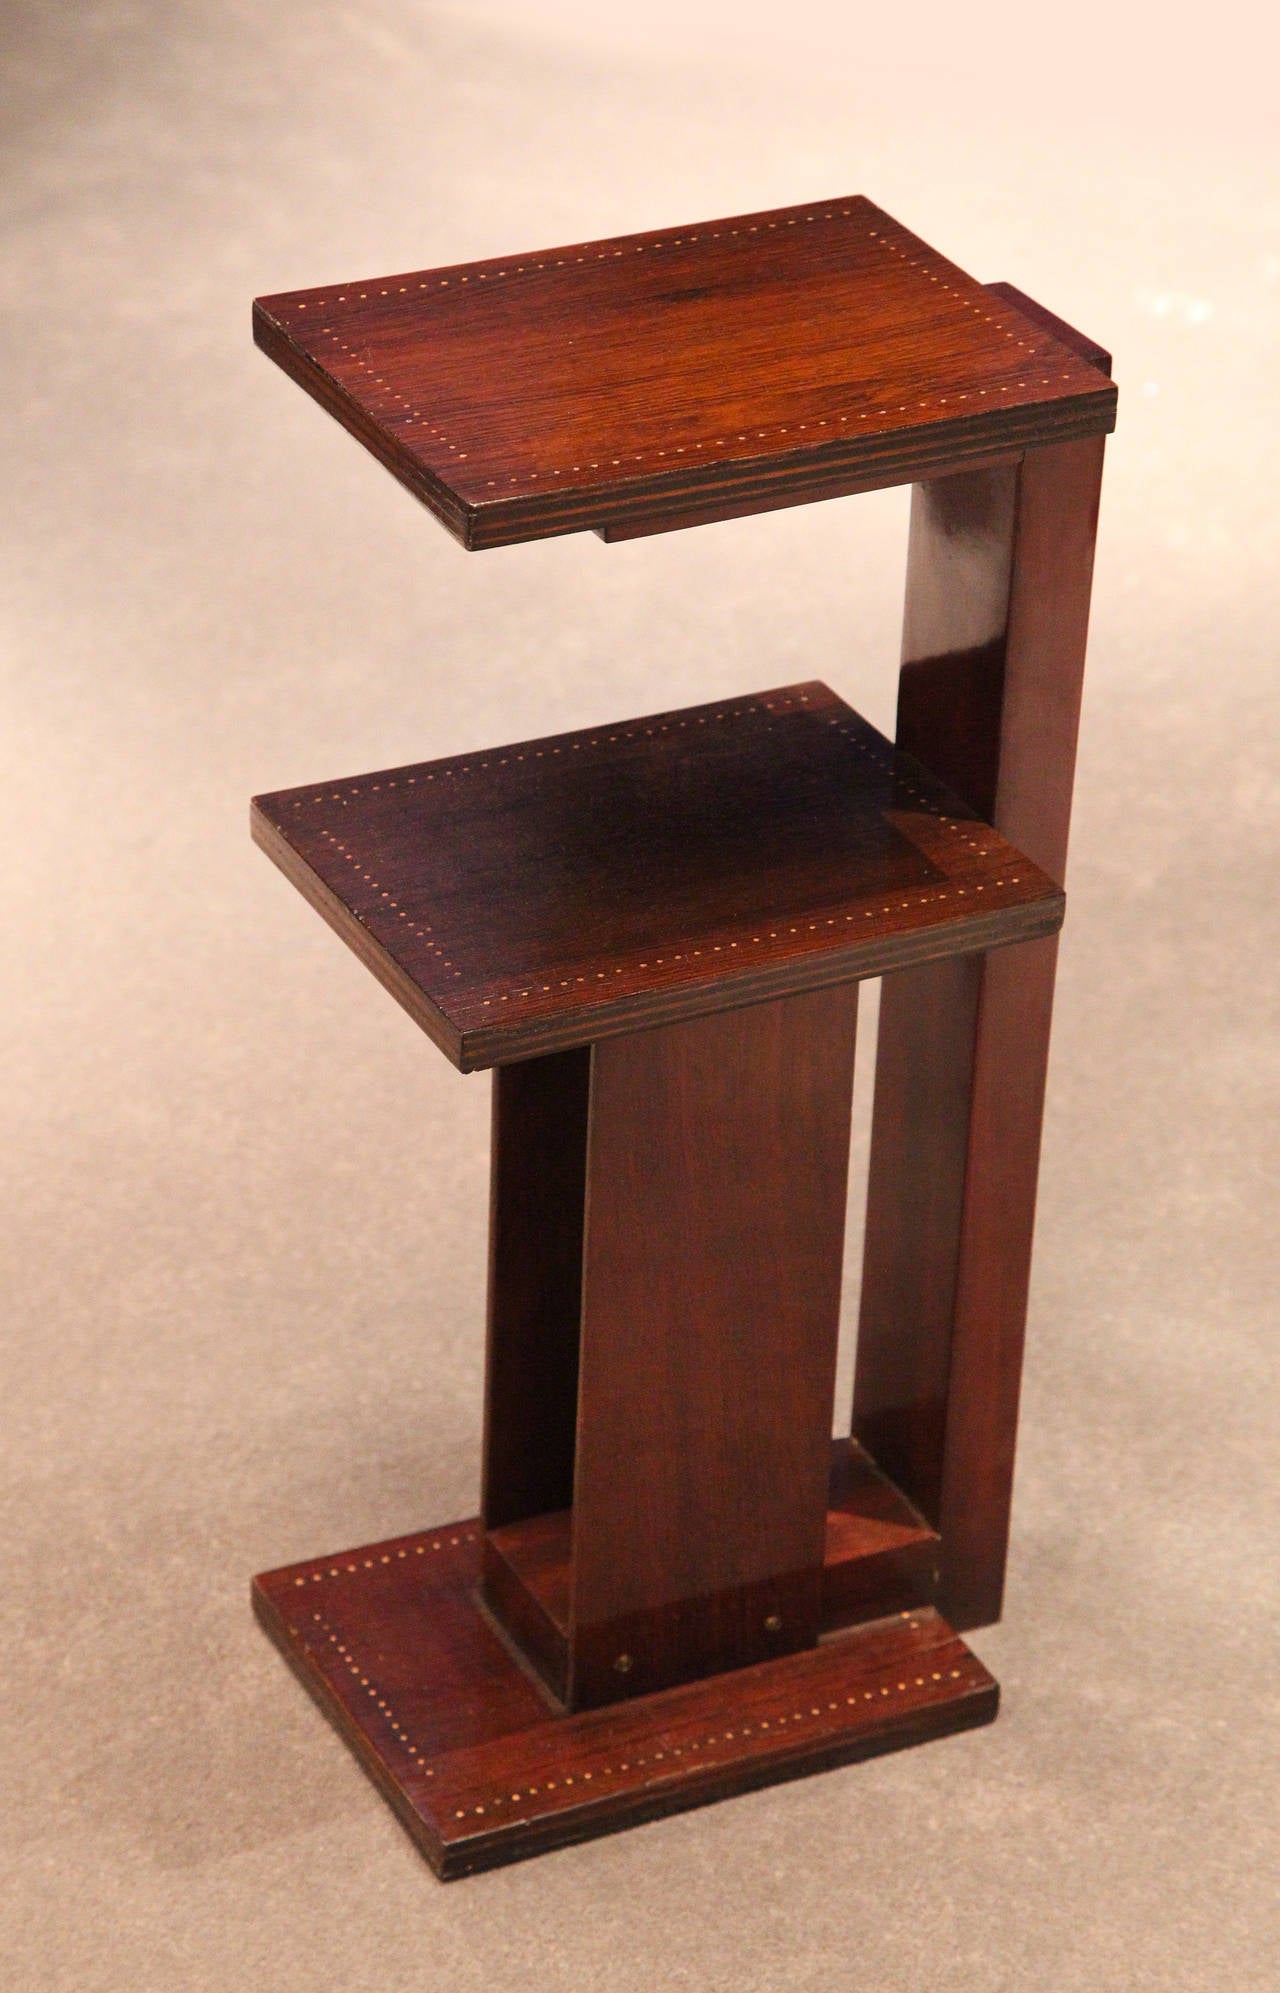 André Sornay - Smoker table, c. 1930
Mahogany